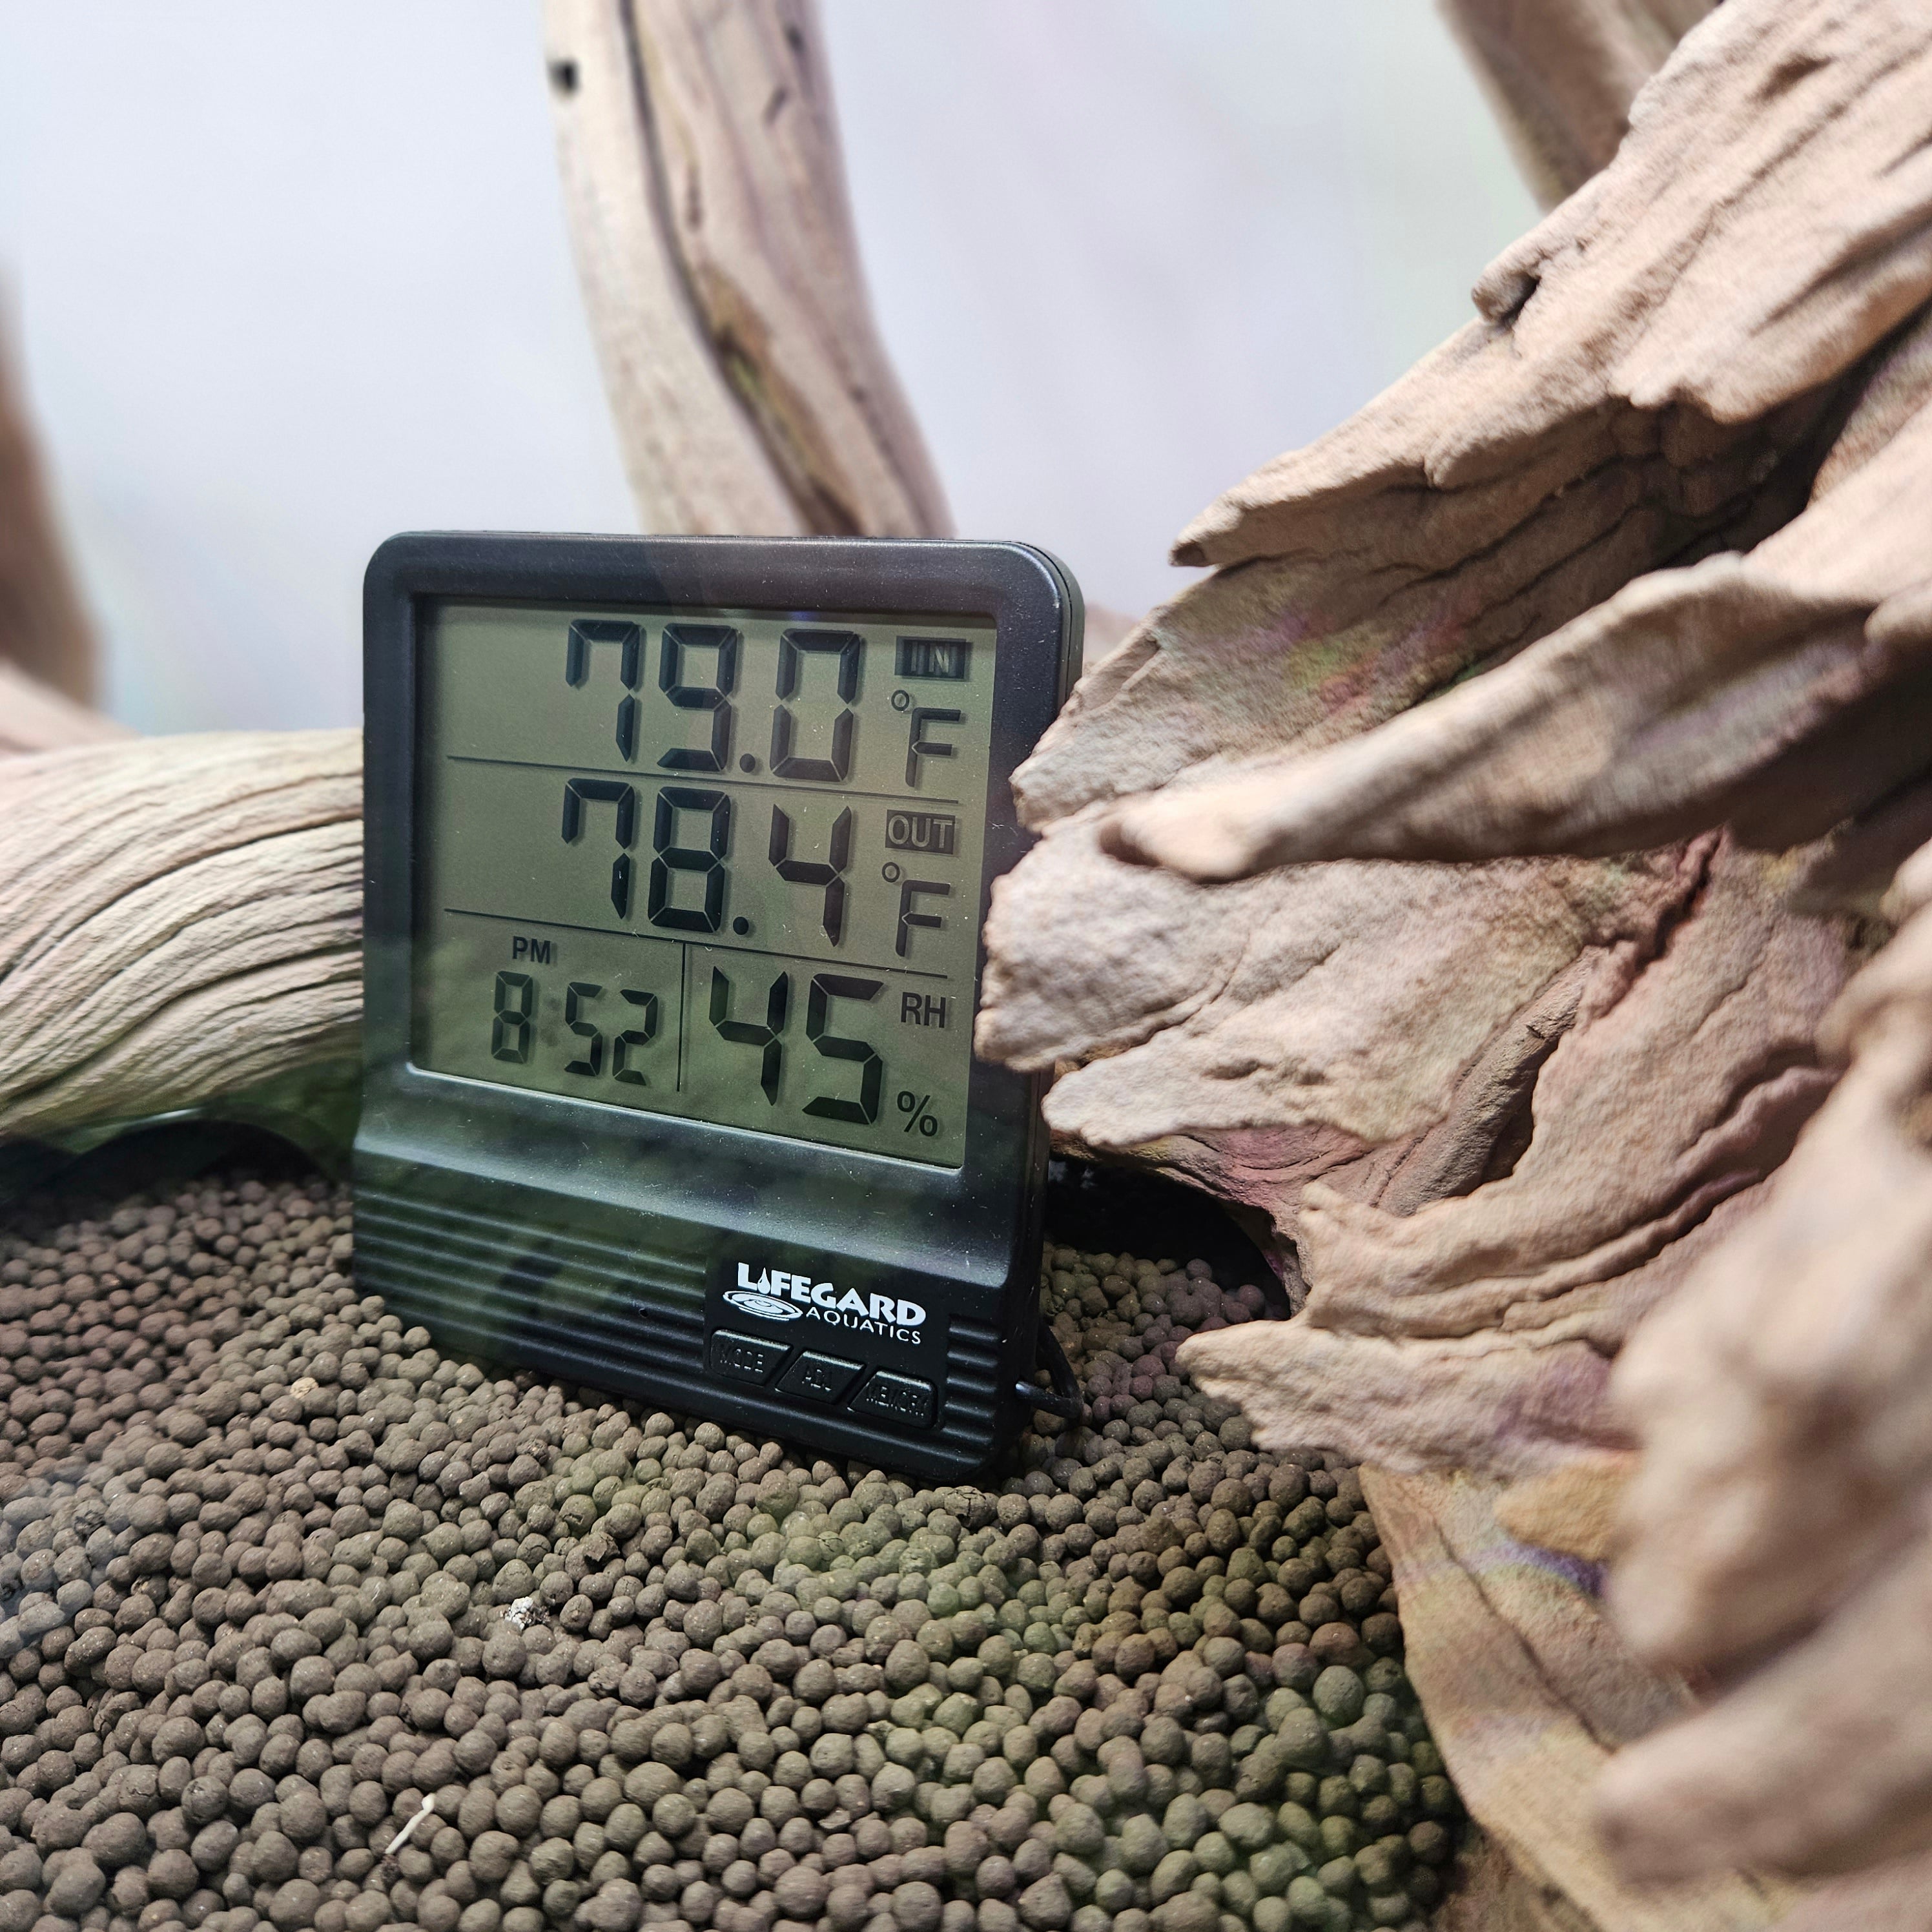 ETI Digital Aquarium Thermometer with Min-Max Alarm – Labyrinth Aquatics